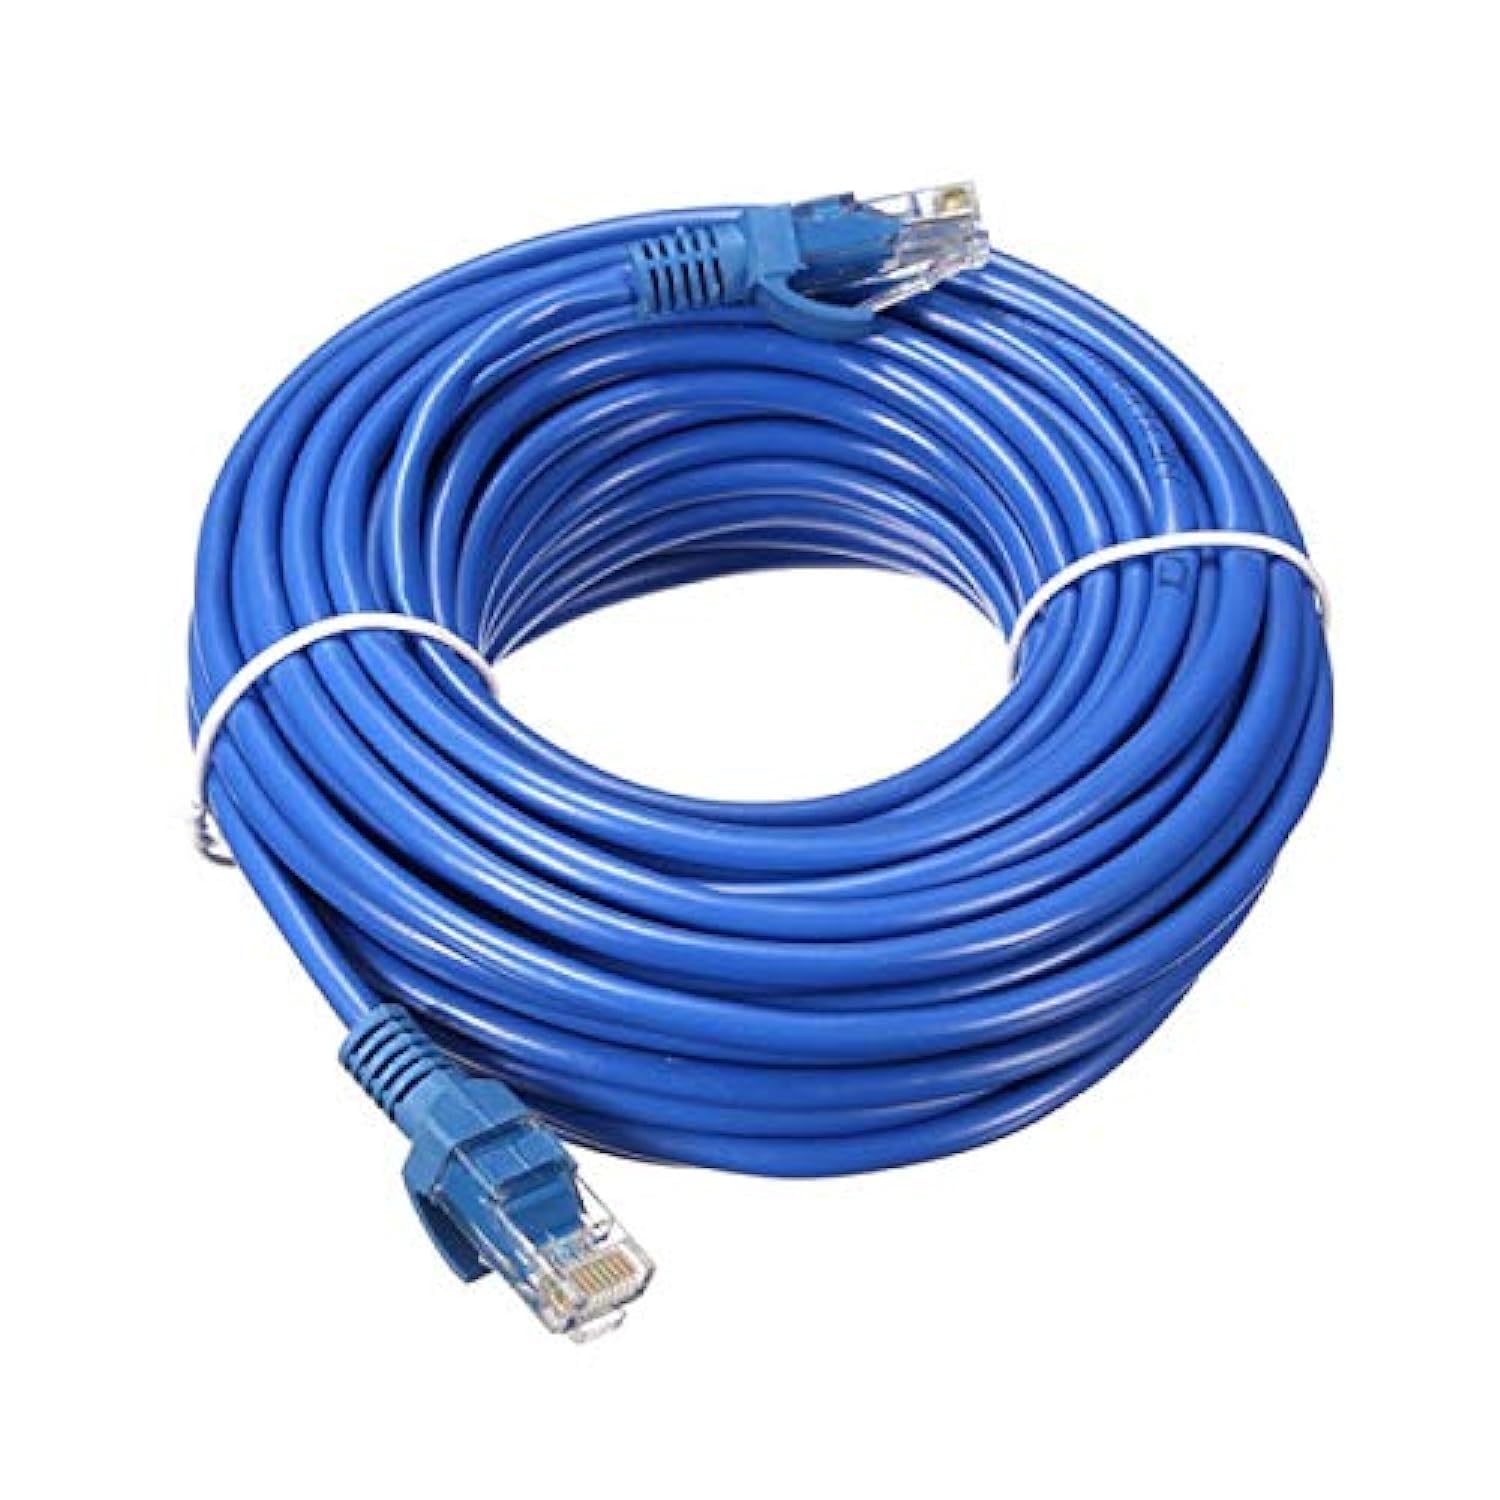 ANDTRONICS CAT-6 Snagless Network RJ45 Ethernet Patch LAN Cable CAT6-5M / 15 ft - Blue